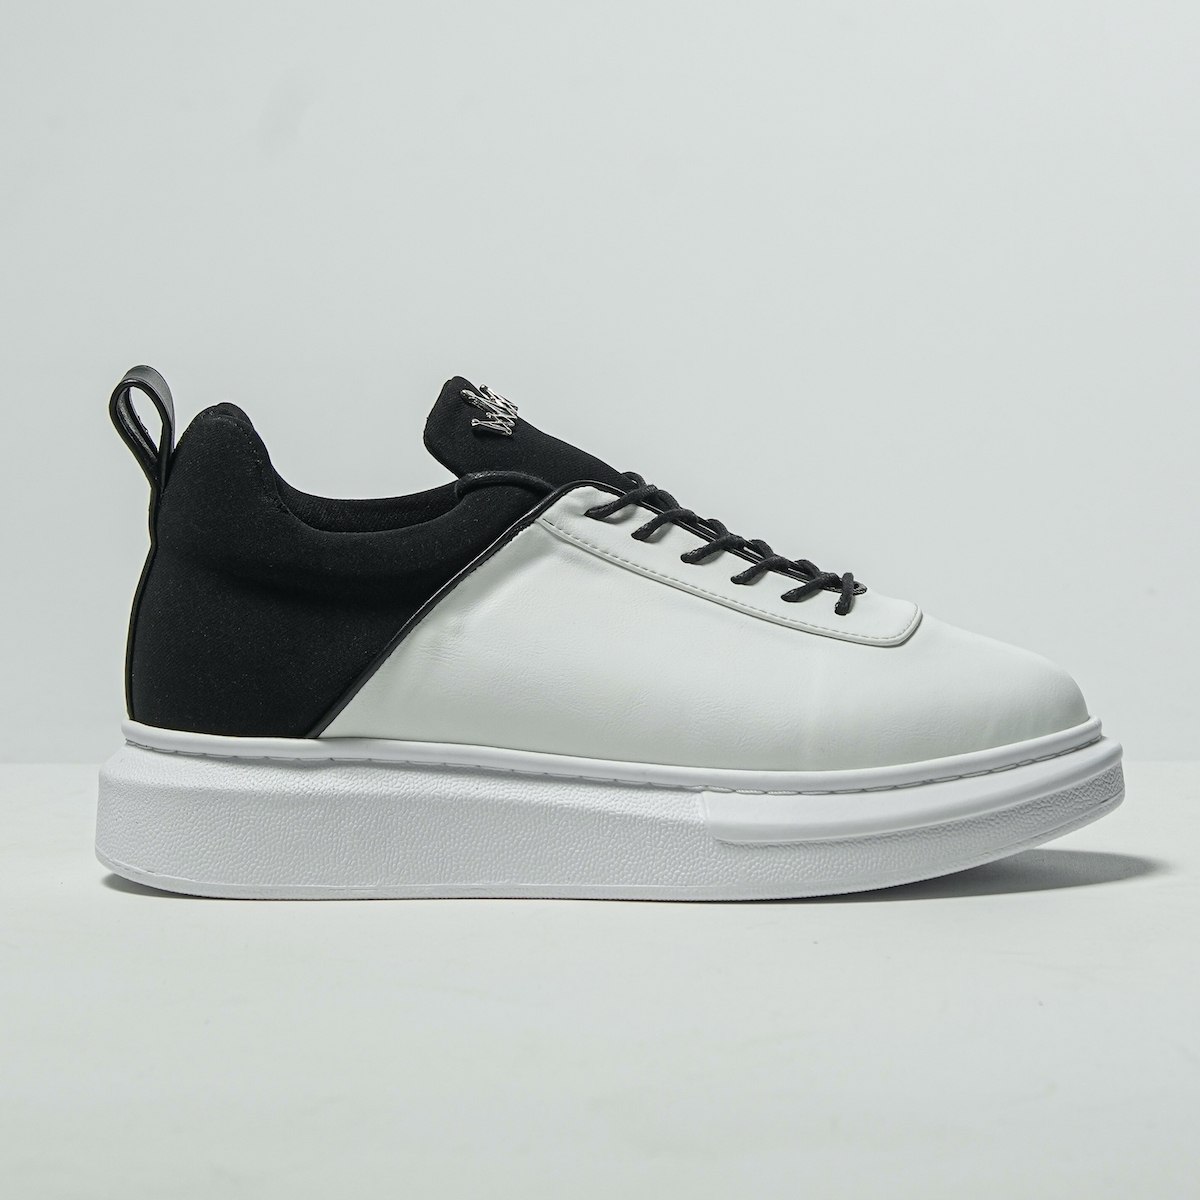 Men's Chunky Sneakers Crown Scuba Soft Designer Shoes White